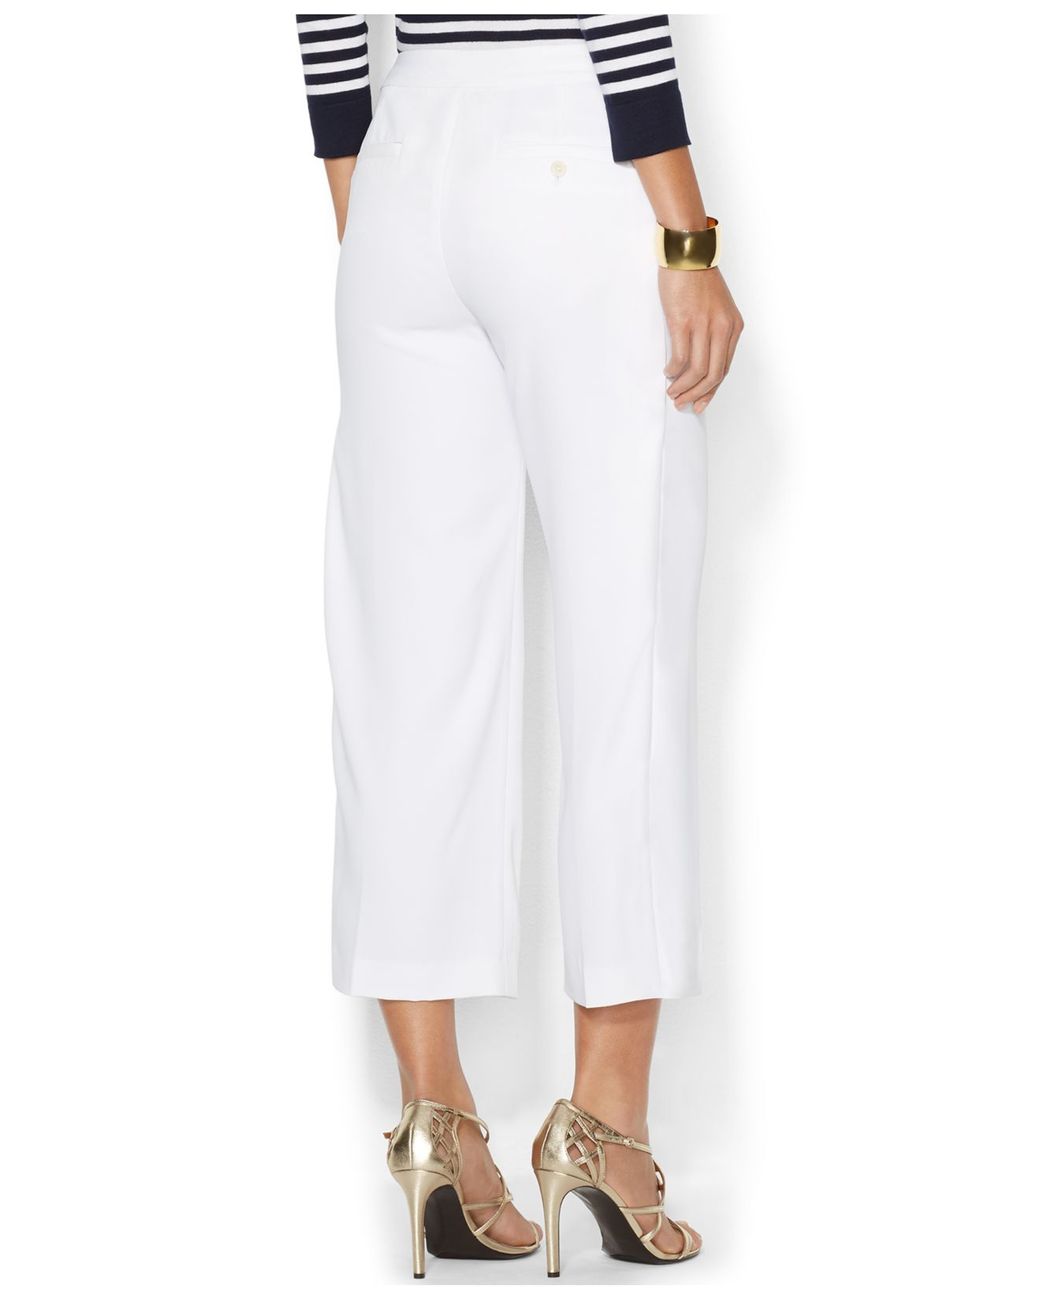 New Chain Cargo Pants Suits Women Summer Zipper White Crop Tops + High  Waist Black Baggy Trousers Sports Two-piece Sets Female - AliExpress